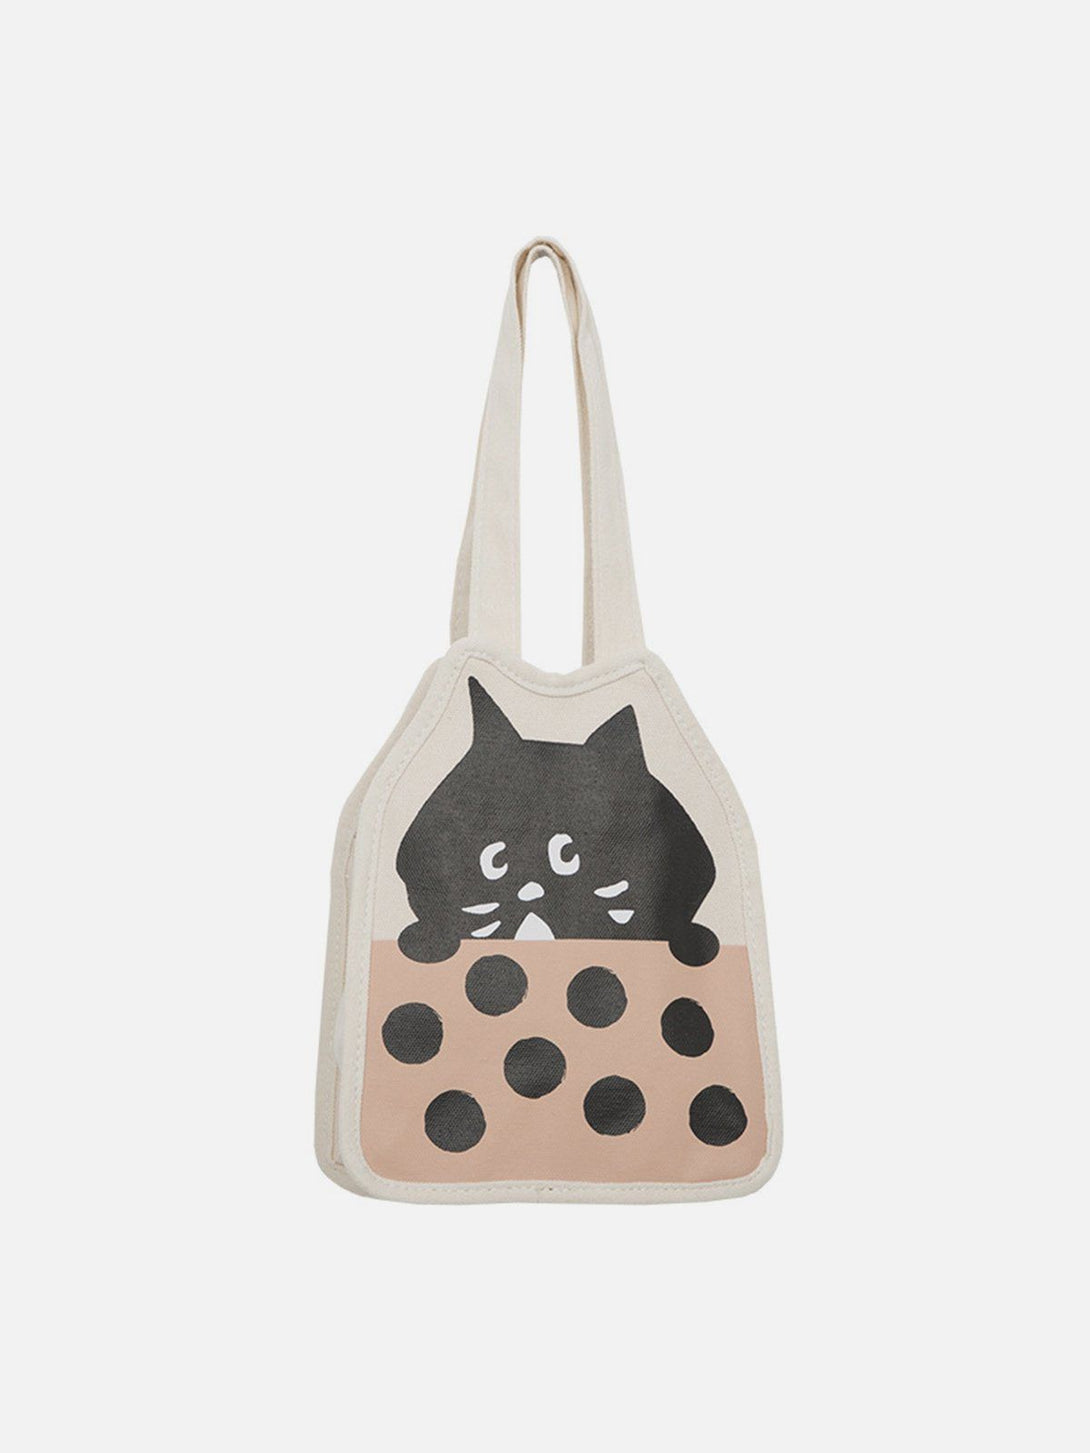 Levefly - Cute Little Black Cat Illustration Canvas Bag - Streetwear Fashion - levefly.com